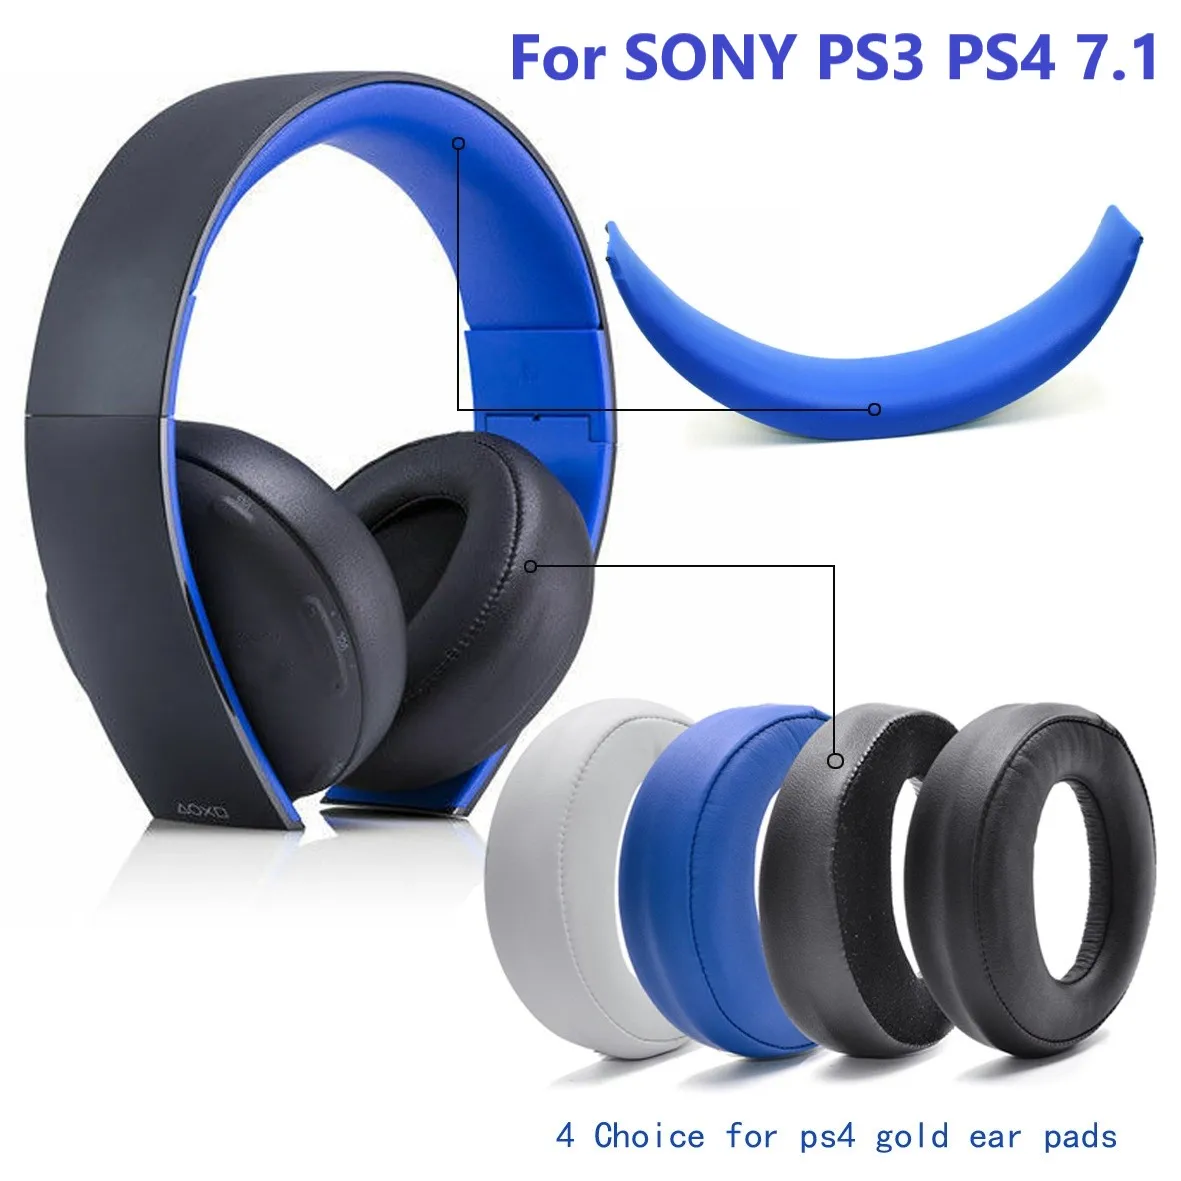 Earpads Blazine Glavo Blazine Pokrovček za Sony PlayStation Zlato Brezžični CECHYA-0083 Stereo 7.1 Slušalke za SONY PS3 PS4 7.1